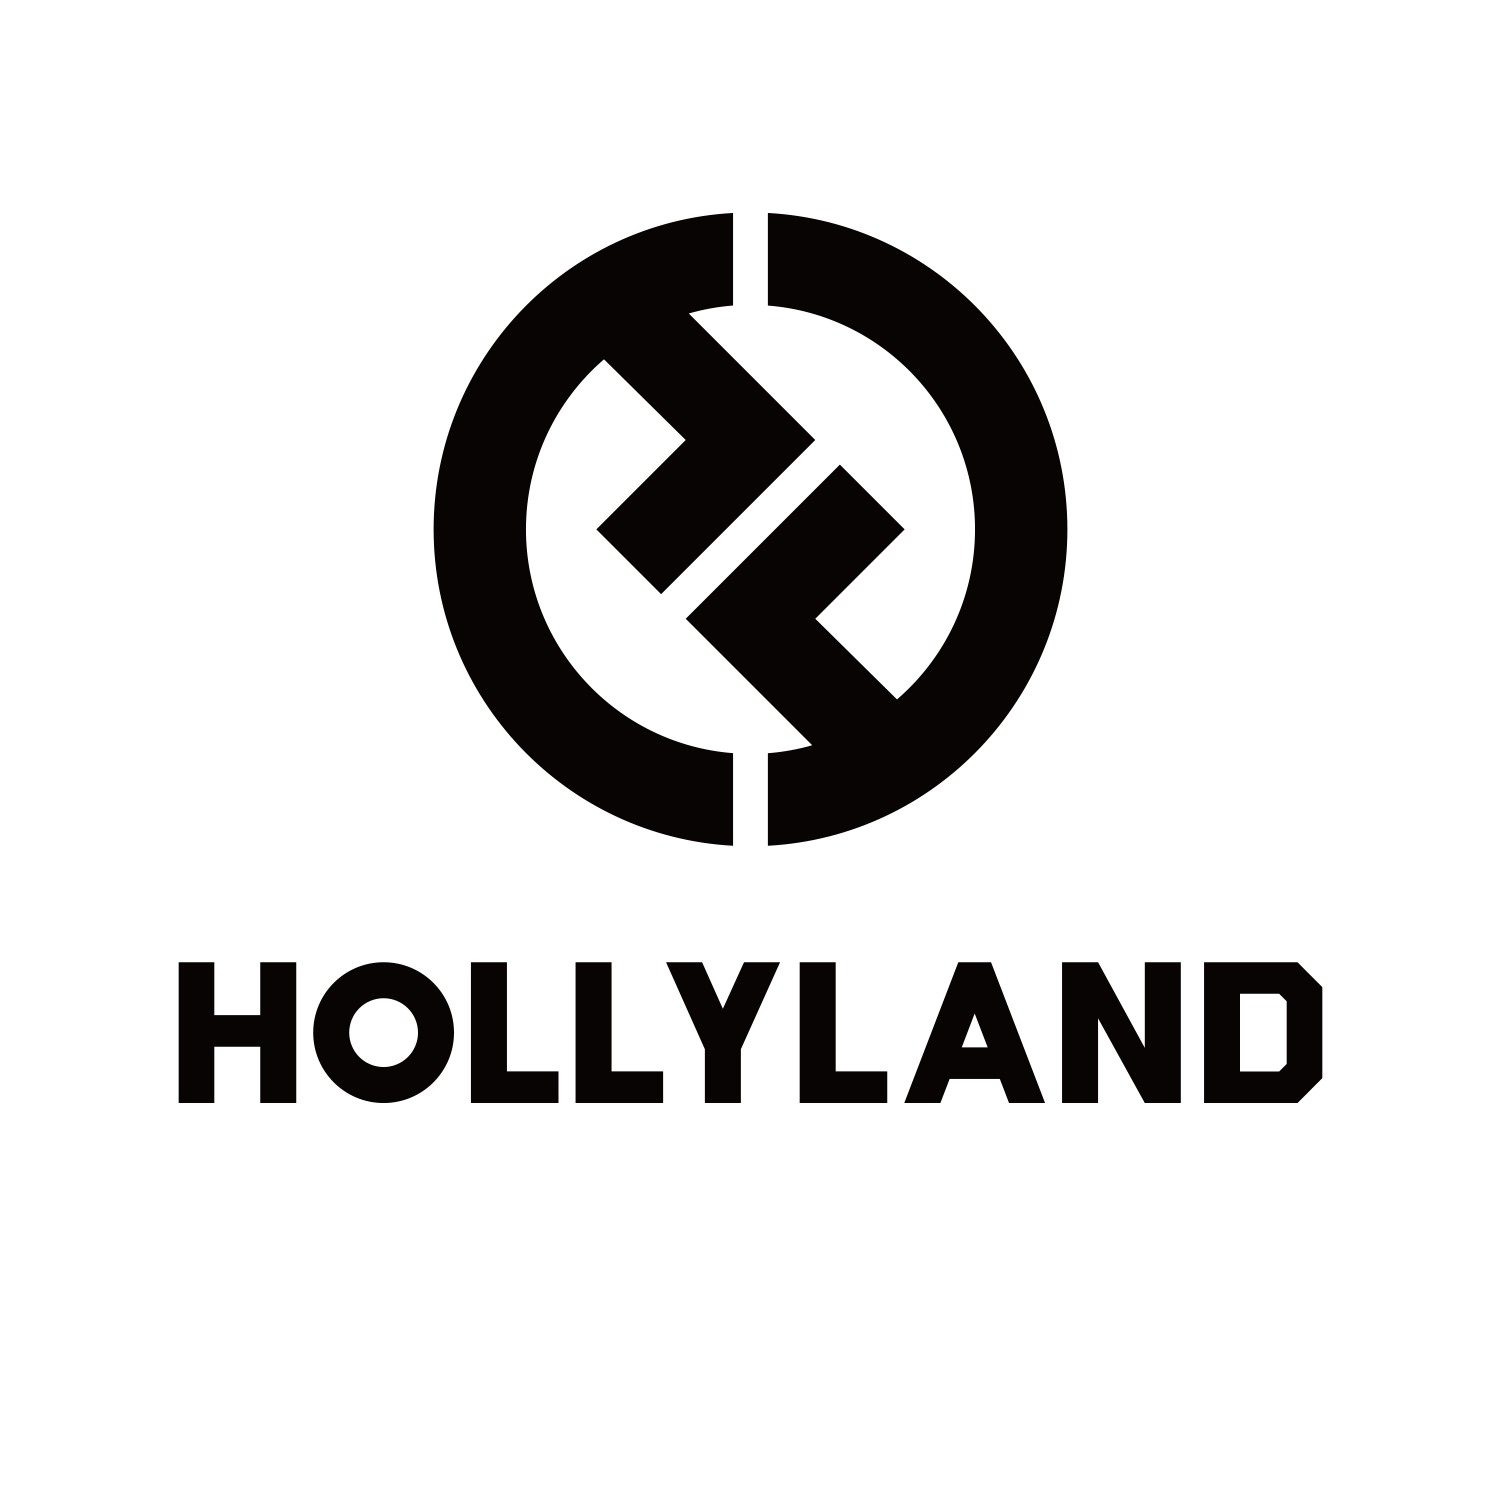 Hollyland LARK M2 ไมโครโฟนไร้สาย เวอร์ชั่น 300 ม. ระยะ LOS 24 บิต Hi-Fi  สําหรับไลฟ์สตรีม